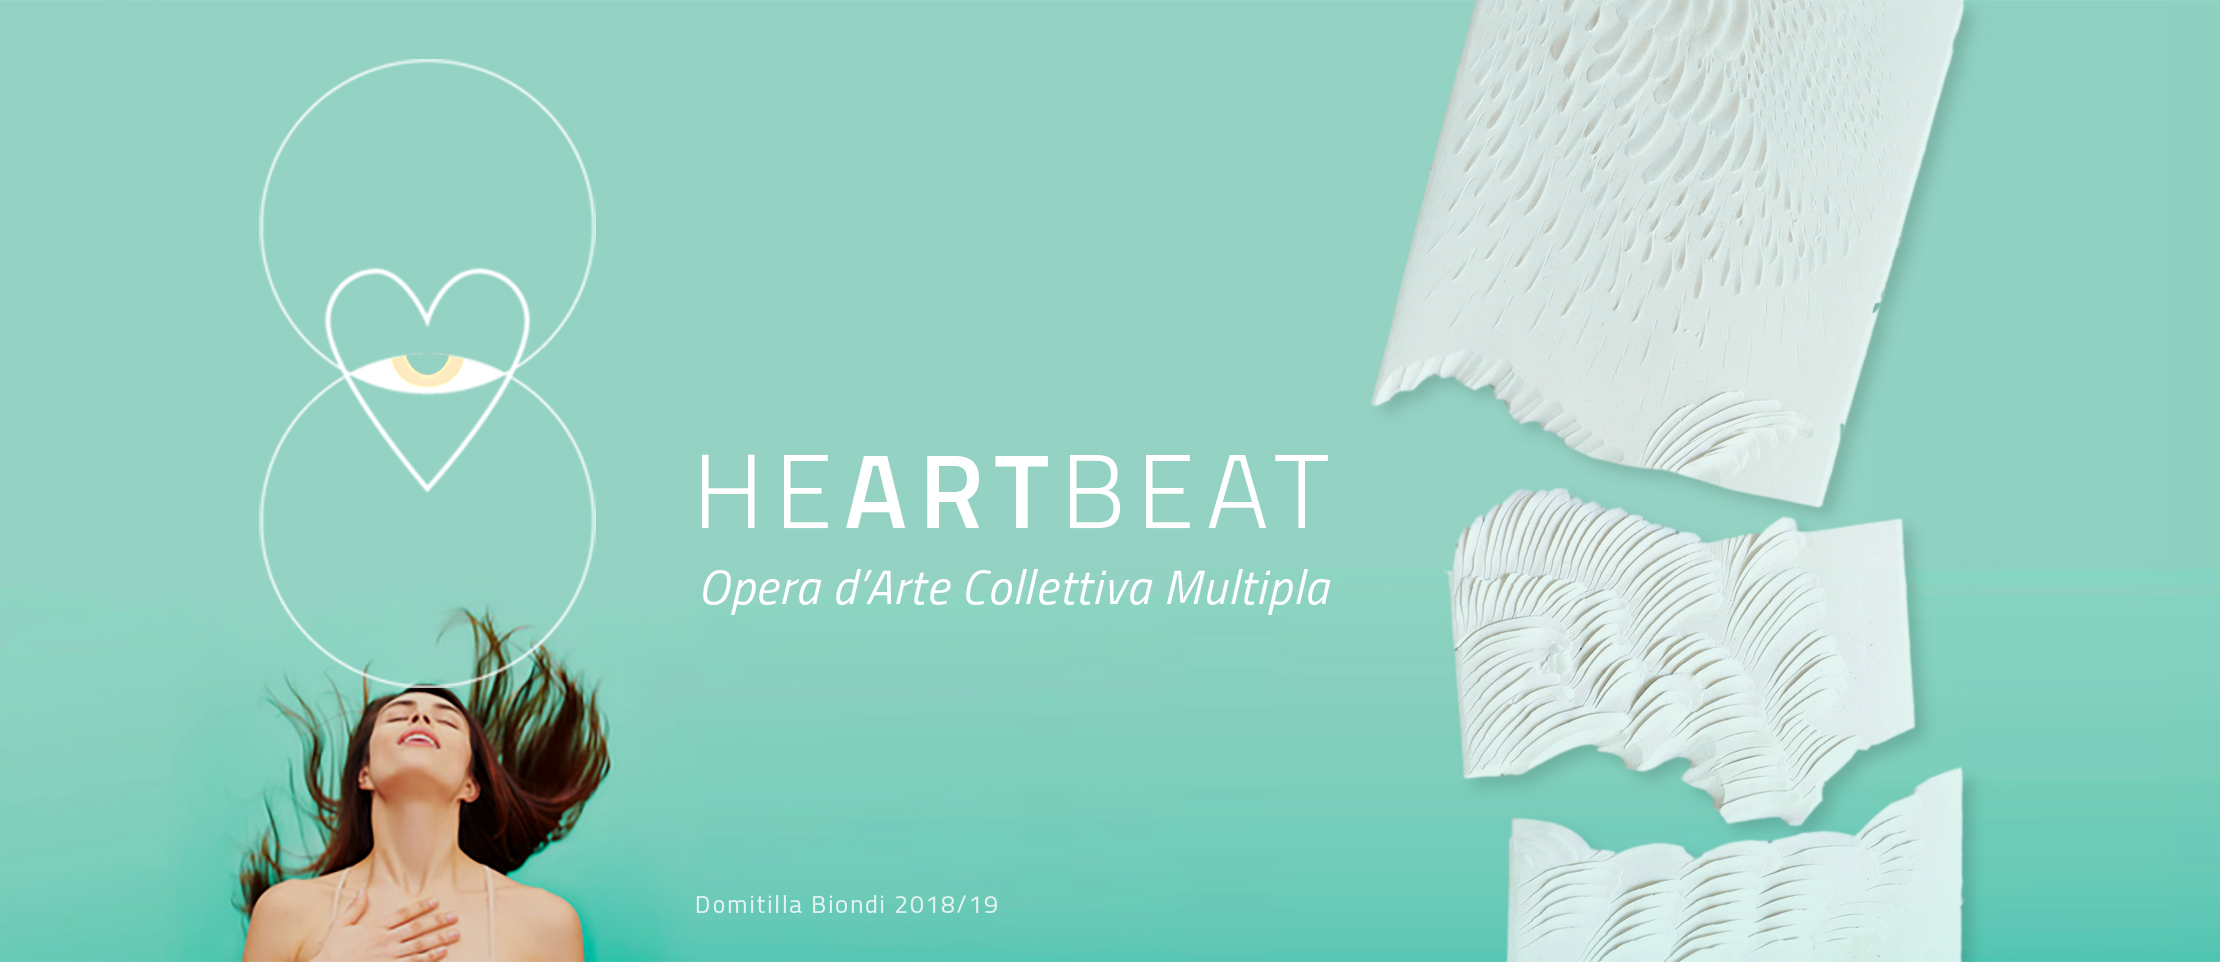 heARTbeat - Opera d'Arte Collettiva Multipla